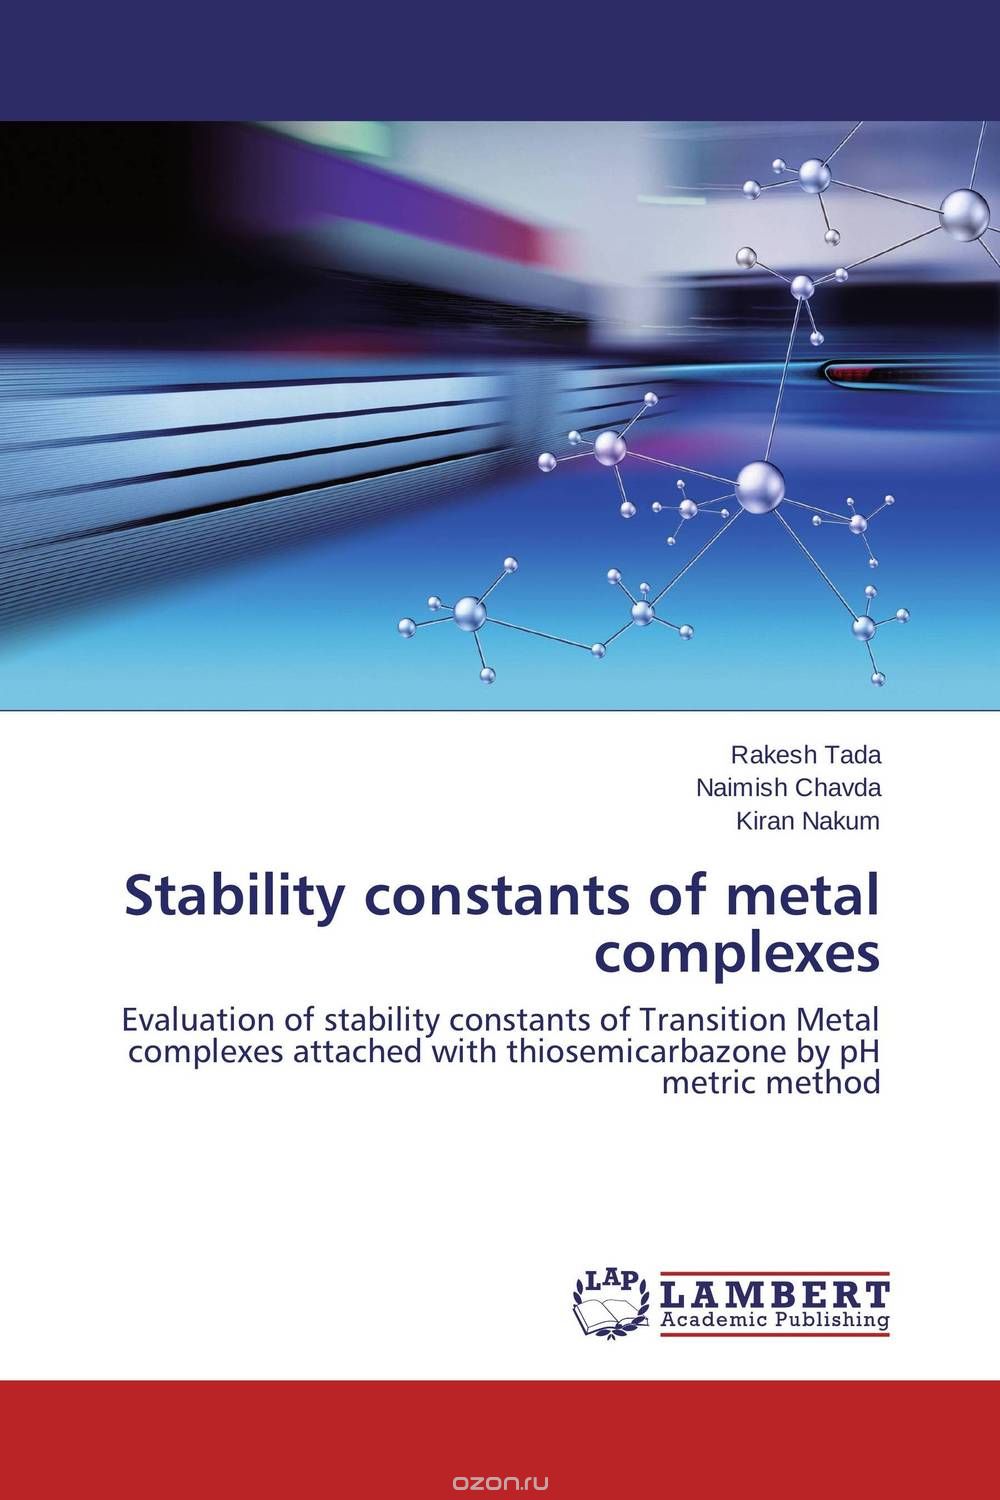 Скачать книгу "Stability constants of metal complexes"